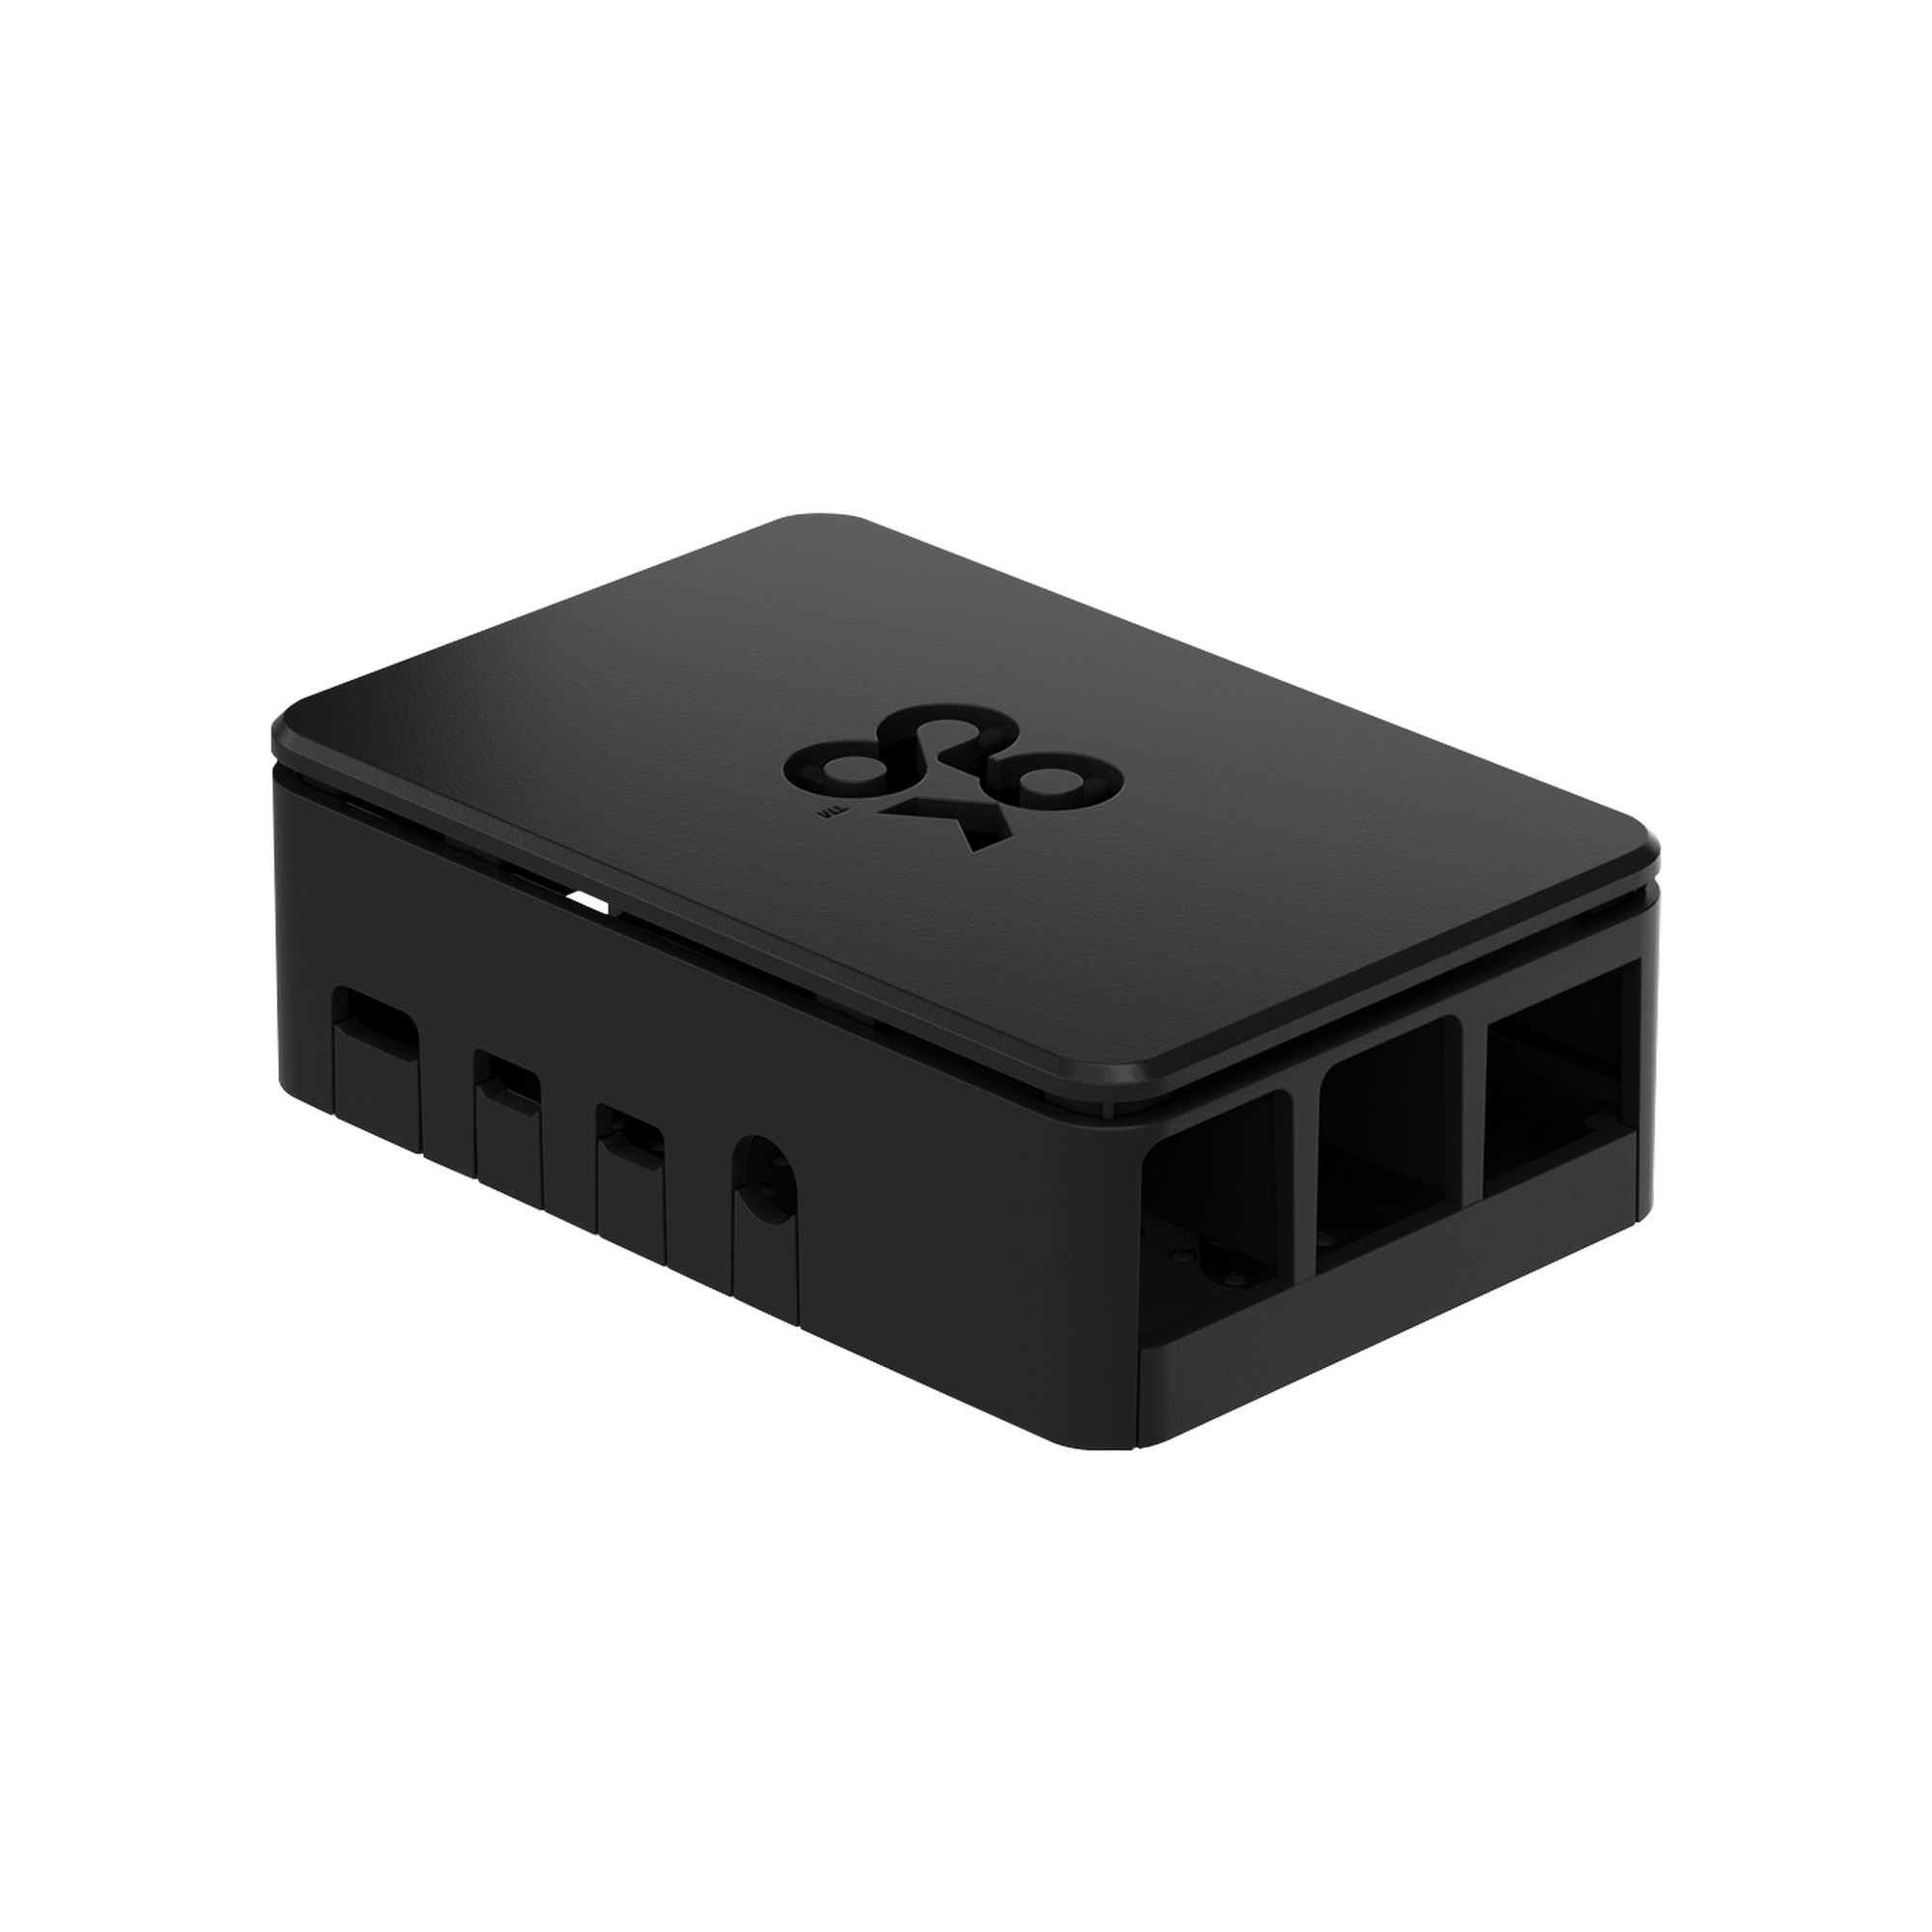 Okdo 3-Piece Raspberry Pi 4 Model B ABS Casing Black RPI 4 Case